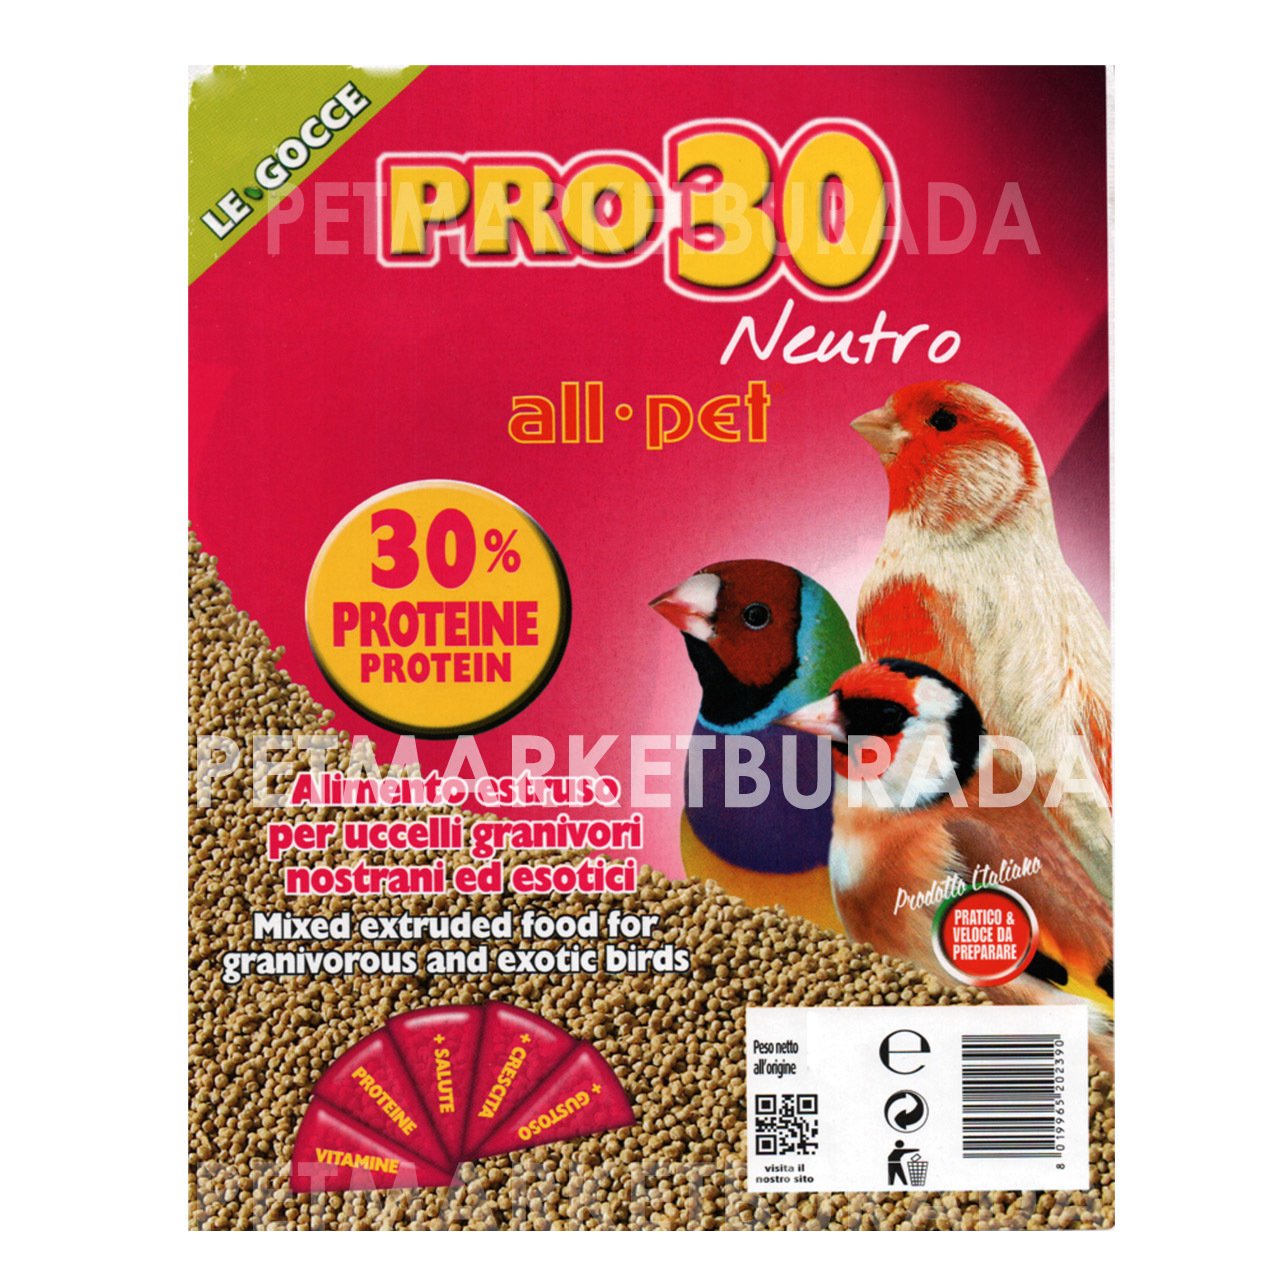 Le Gocce PRO 30 Neutro Bianco Protein&Vitaminli Özel Mama Nemlendiricisi 1 kg (Bölünmüş)